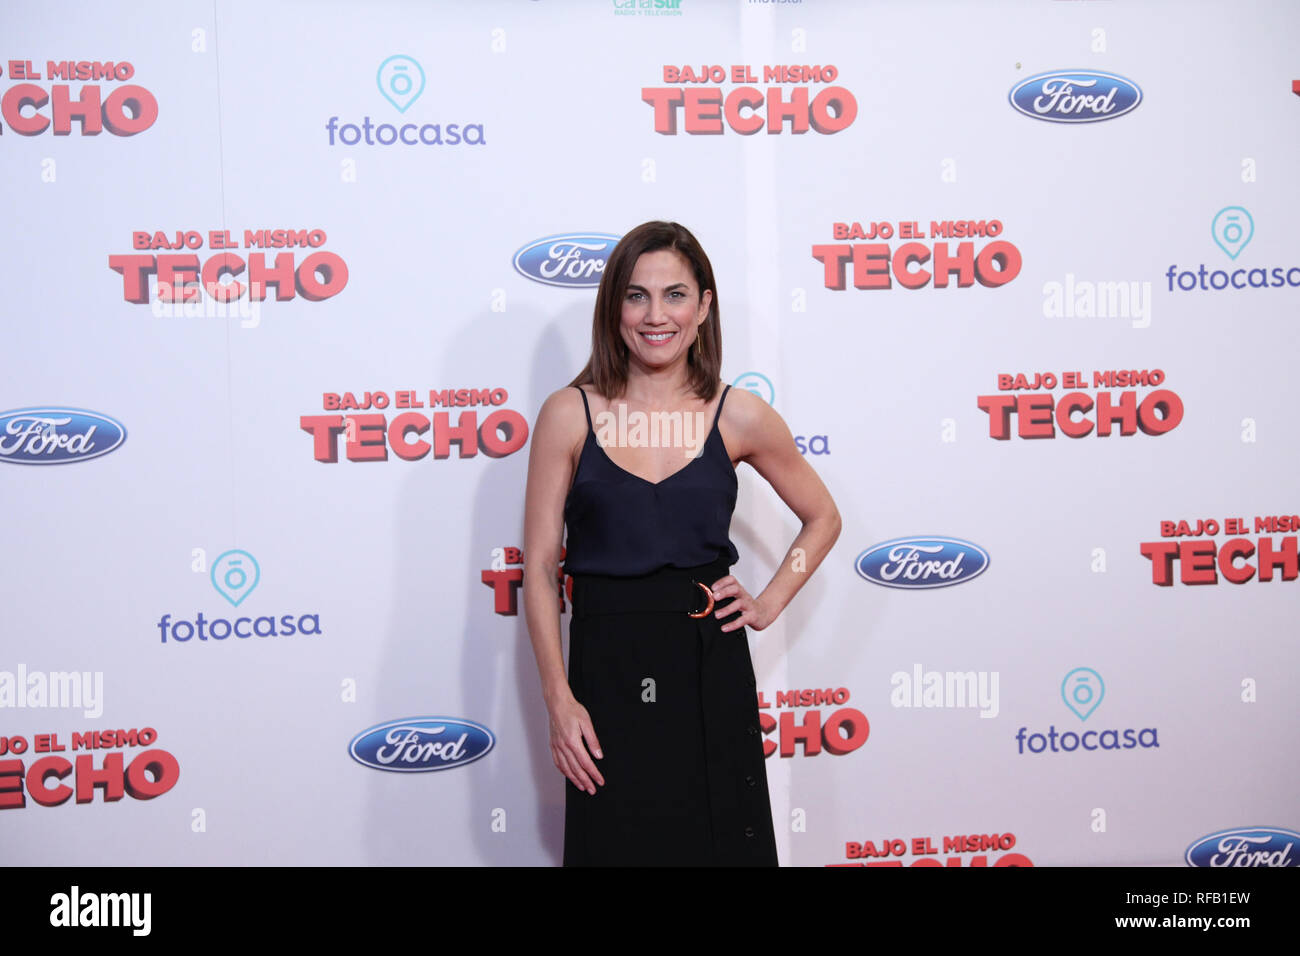 Toni Acosta attends the Premiere of the movie 'Bajo El Mismo Techo' in Madrid. Stock Photo